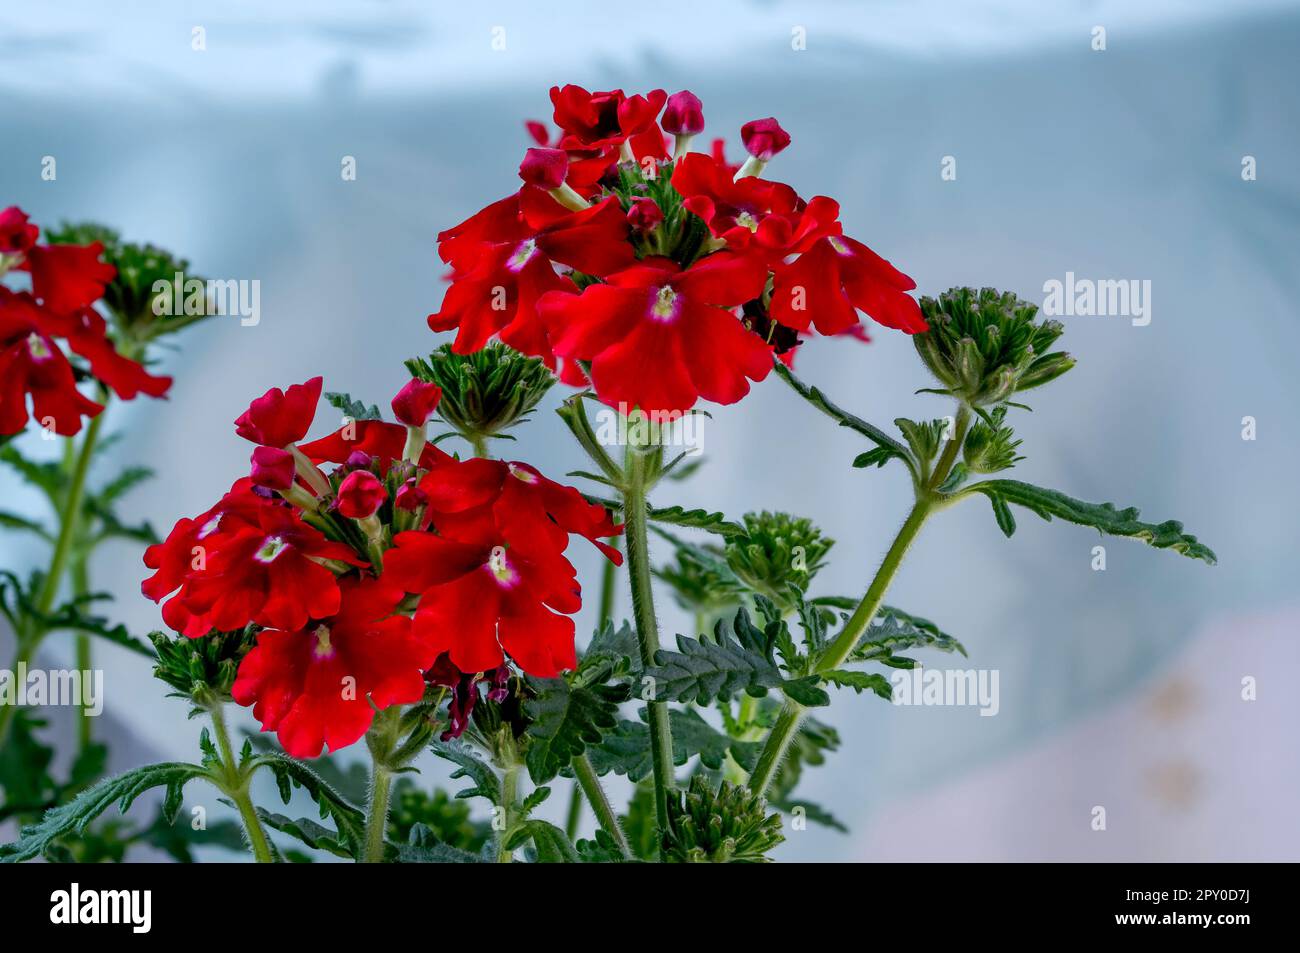 Garden verbena (Verbena hybrida), red flowers of a popular ornamental plant, delicate elegant romantic background, flowers in full bloom close-up Stock Photo